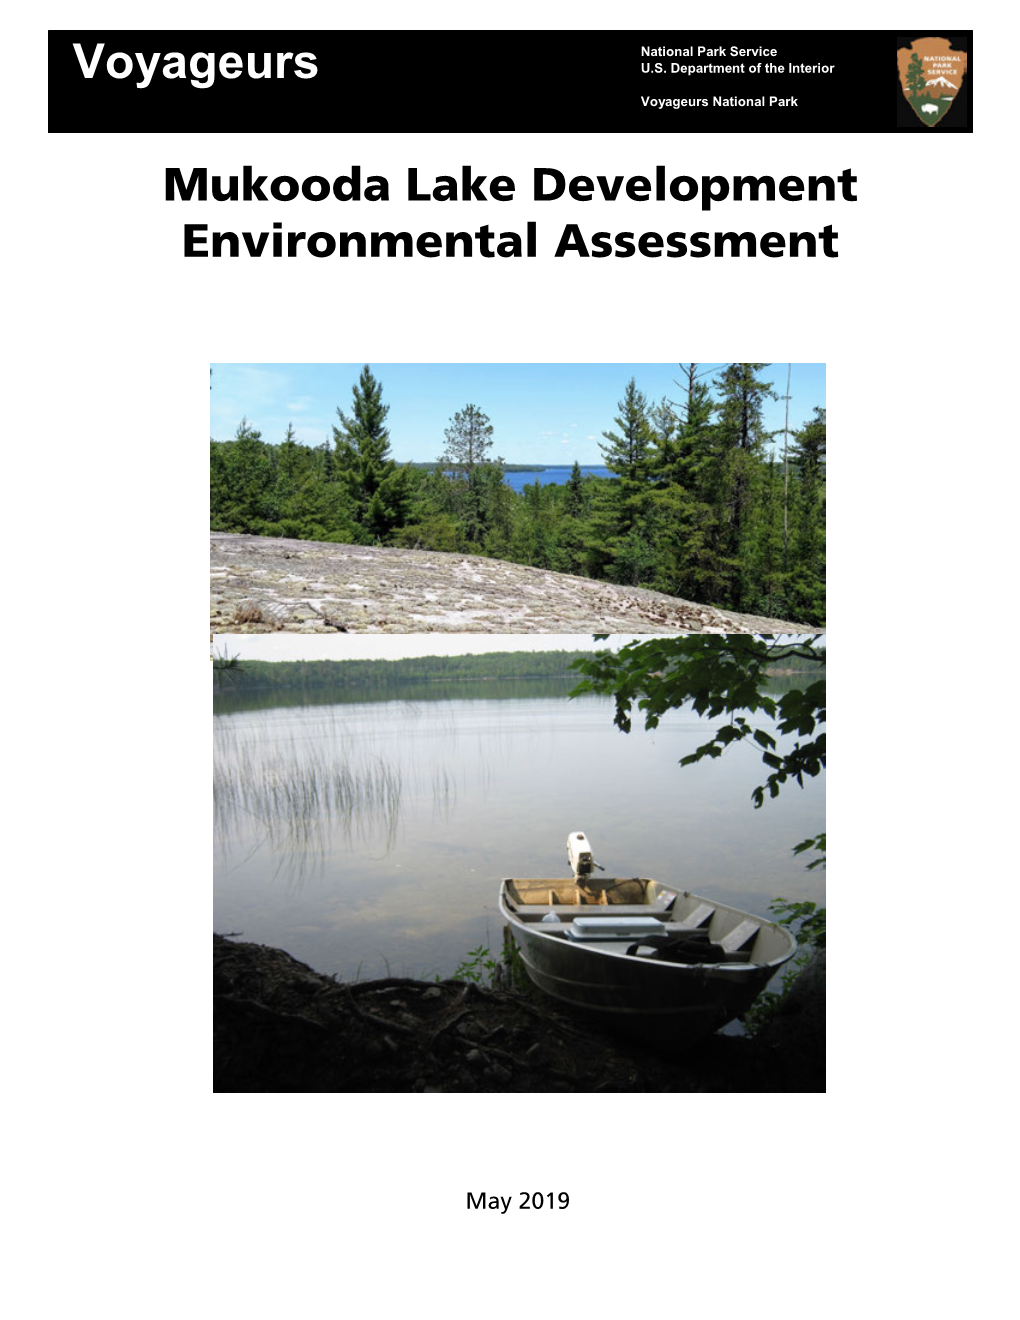 Voyageurs National Park, Mukooda Lake Development EA and FONSI